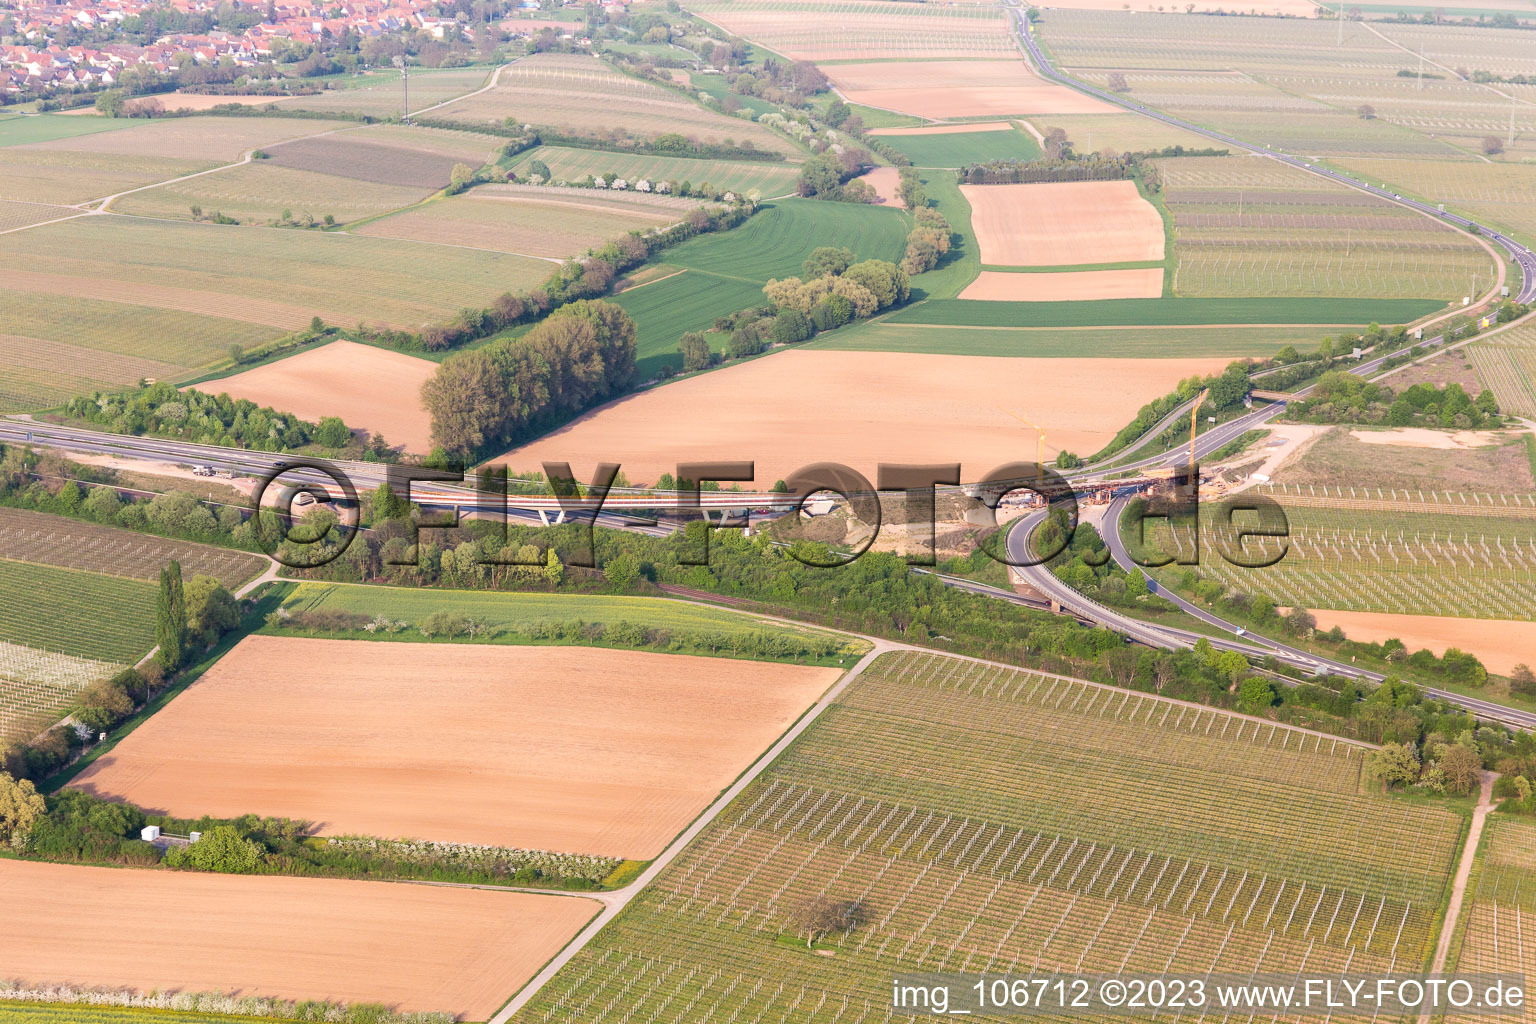 District Dammheim in Landau in der Pfalz in the state Rhineland-Palatinate, Germany from above